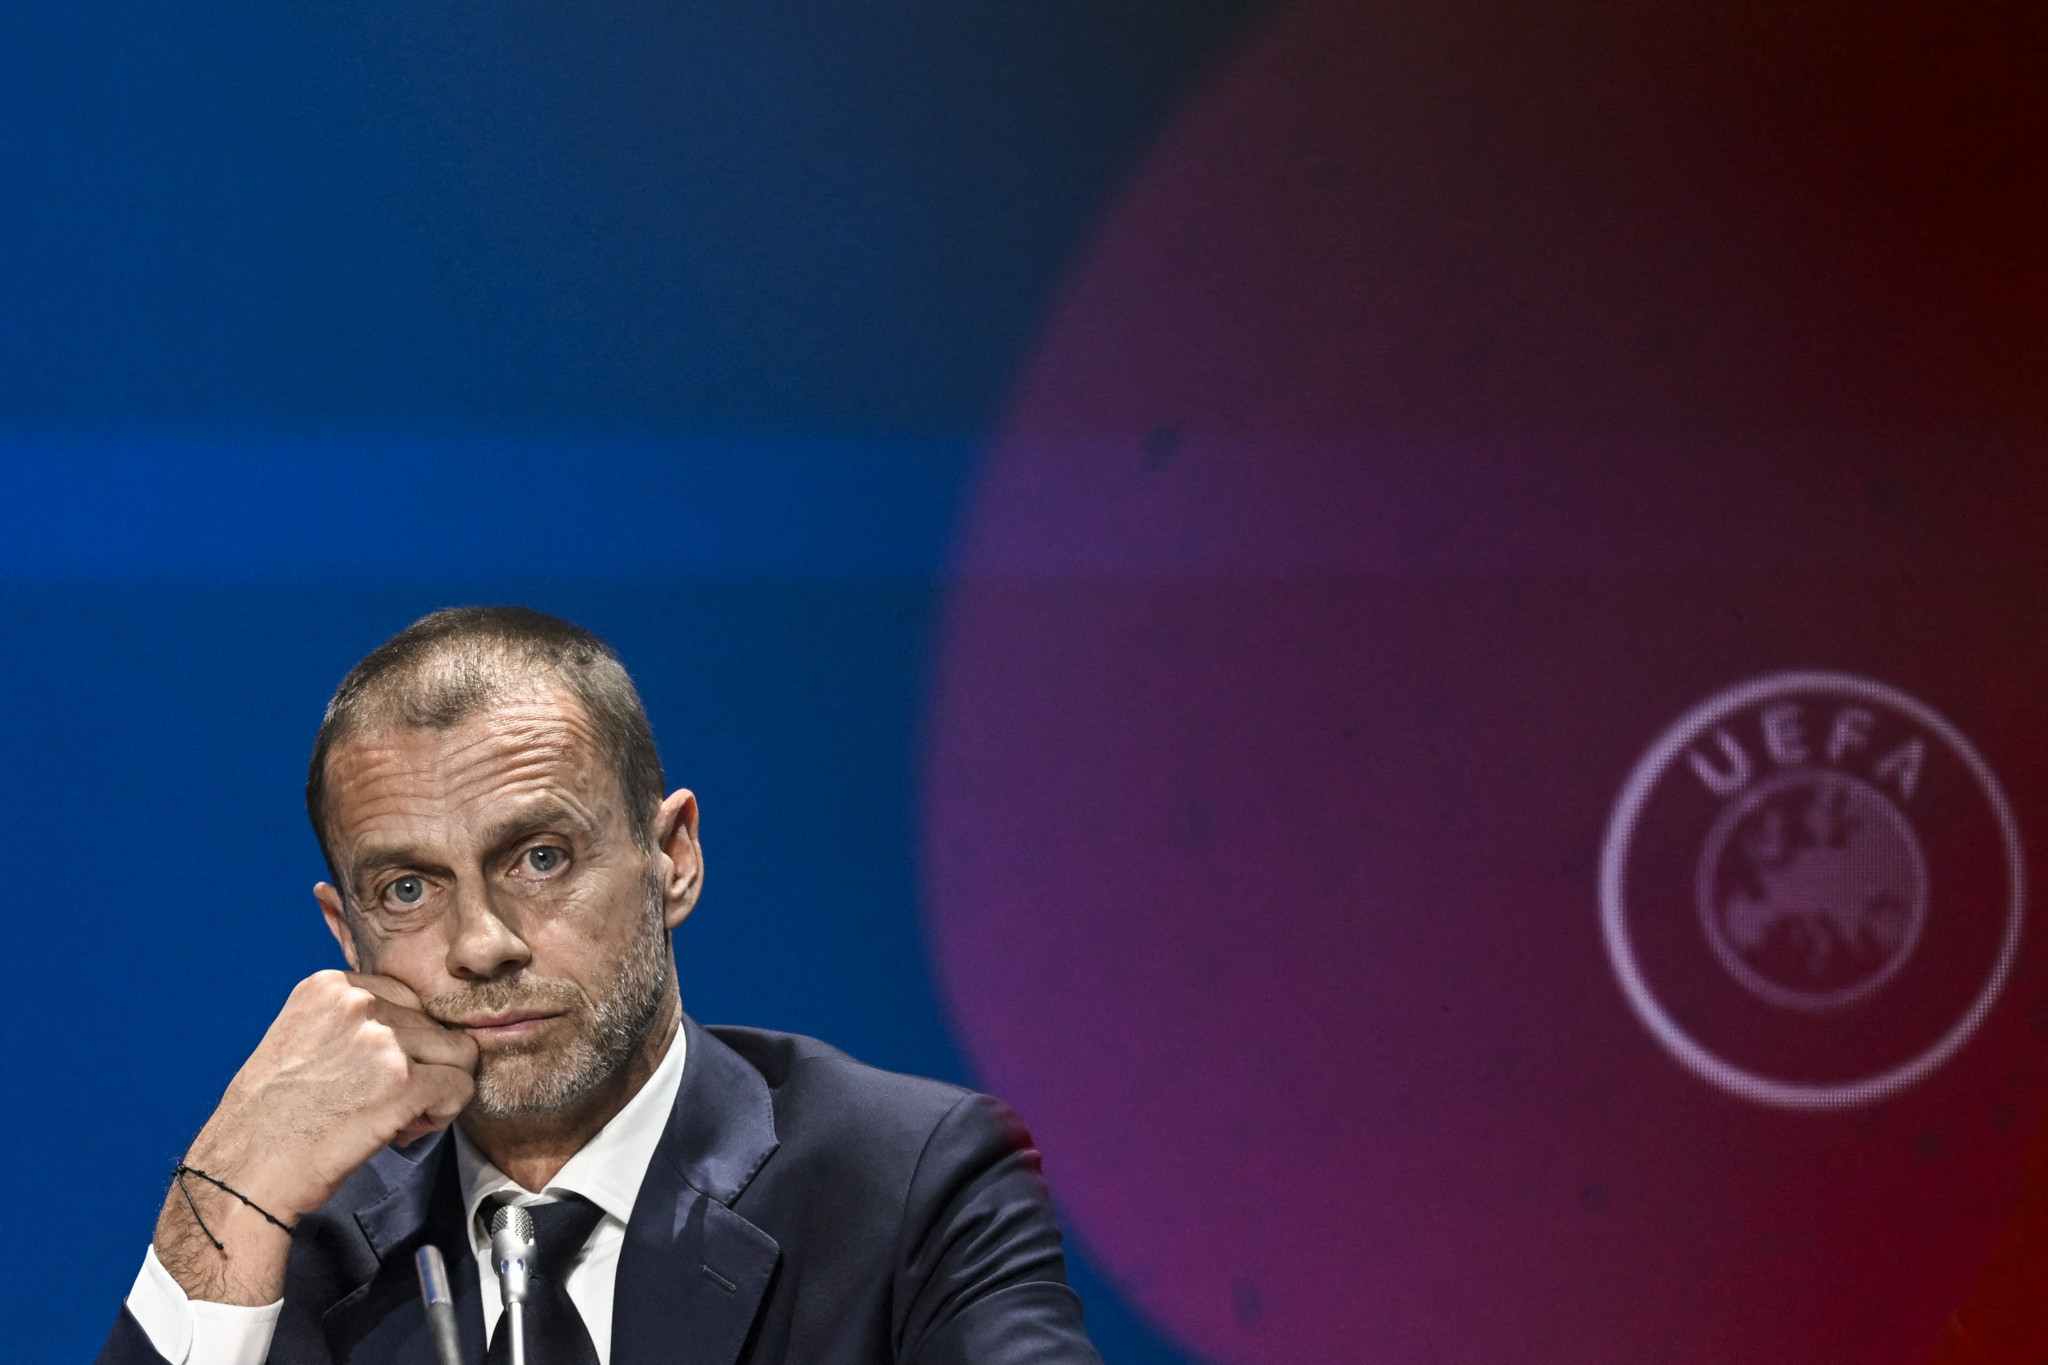 UEFA President Čeferin praised for "loyalty" to Russia by former RFU President